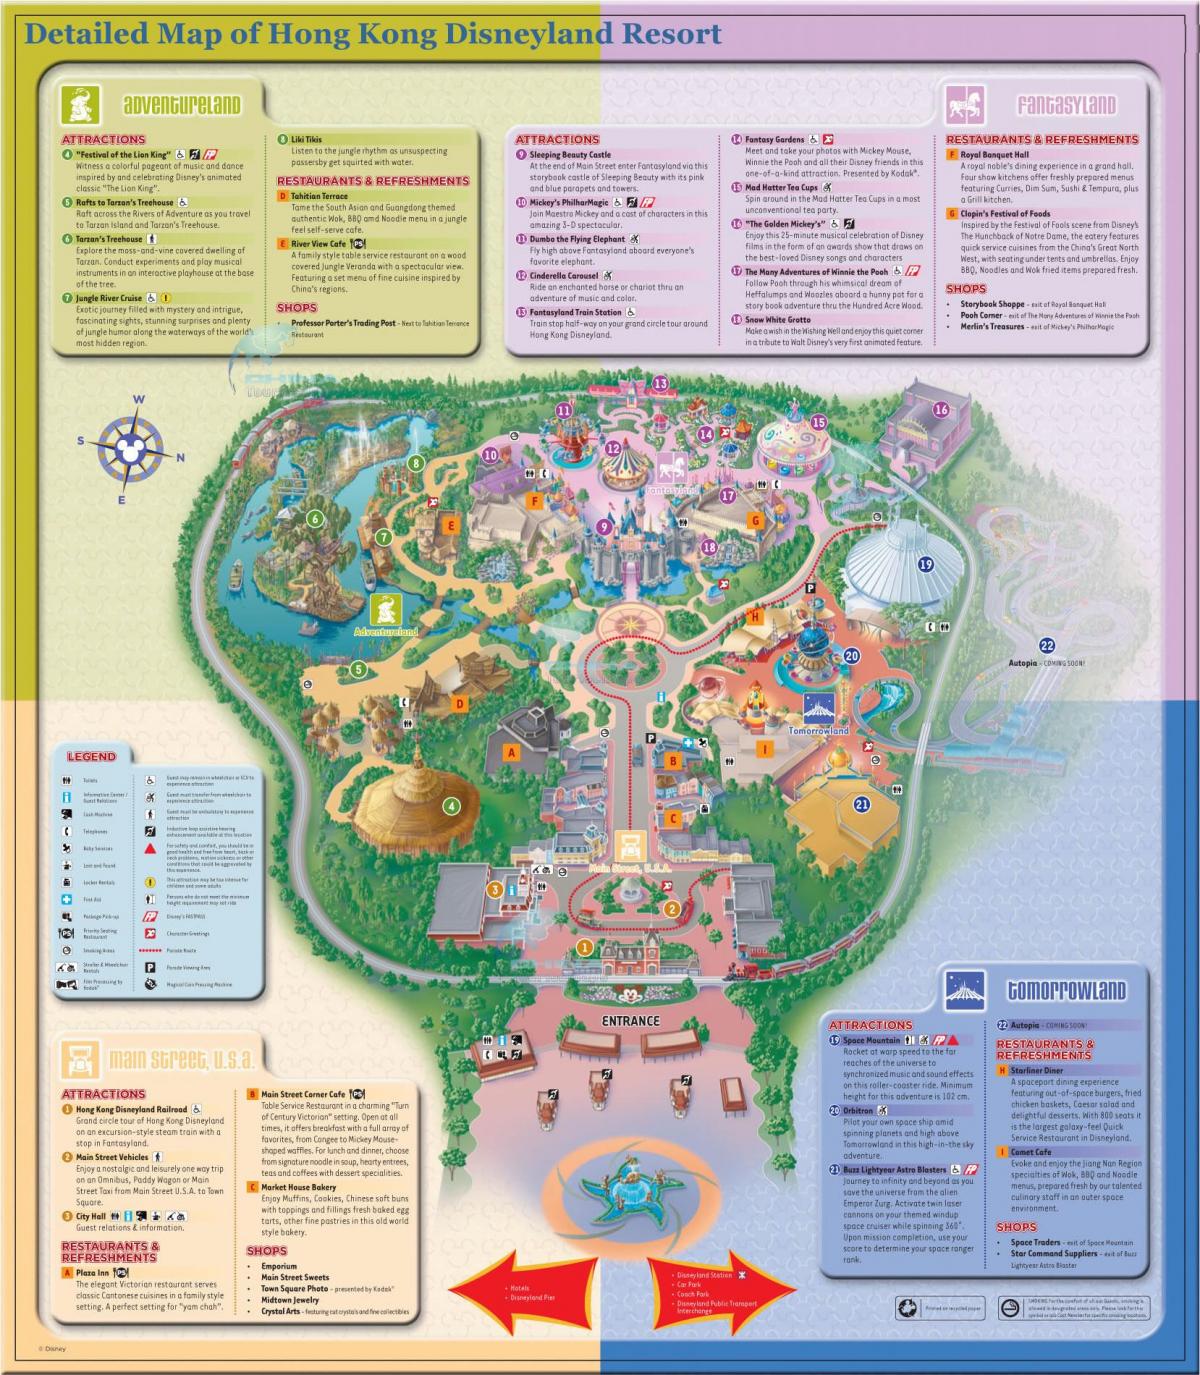 Hong Kong Disneyland park map